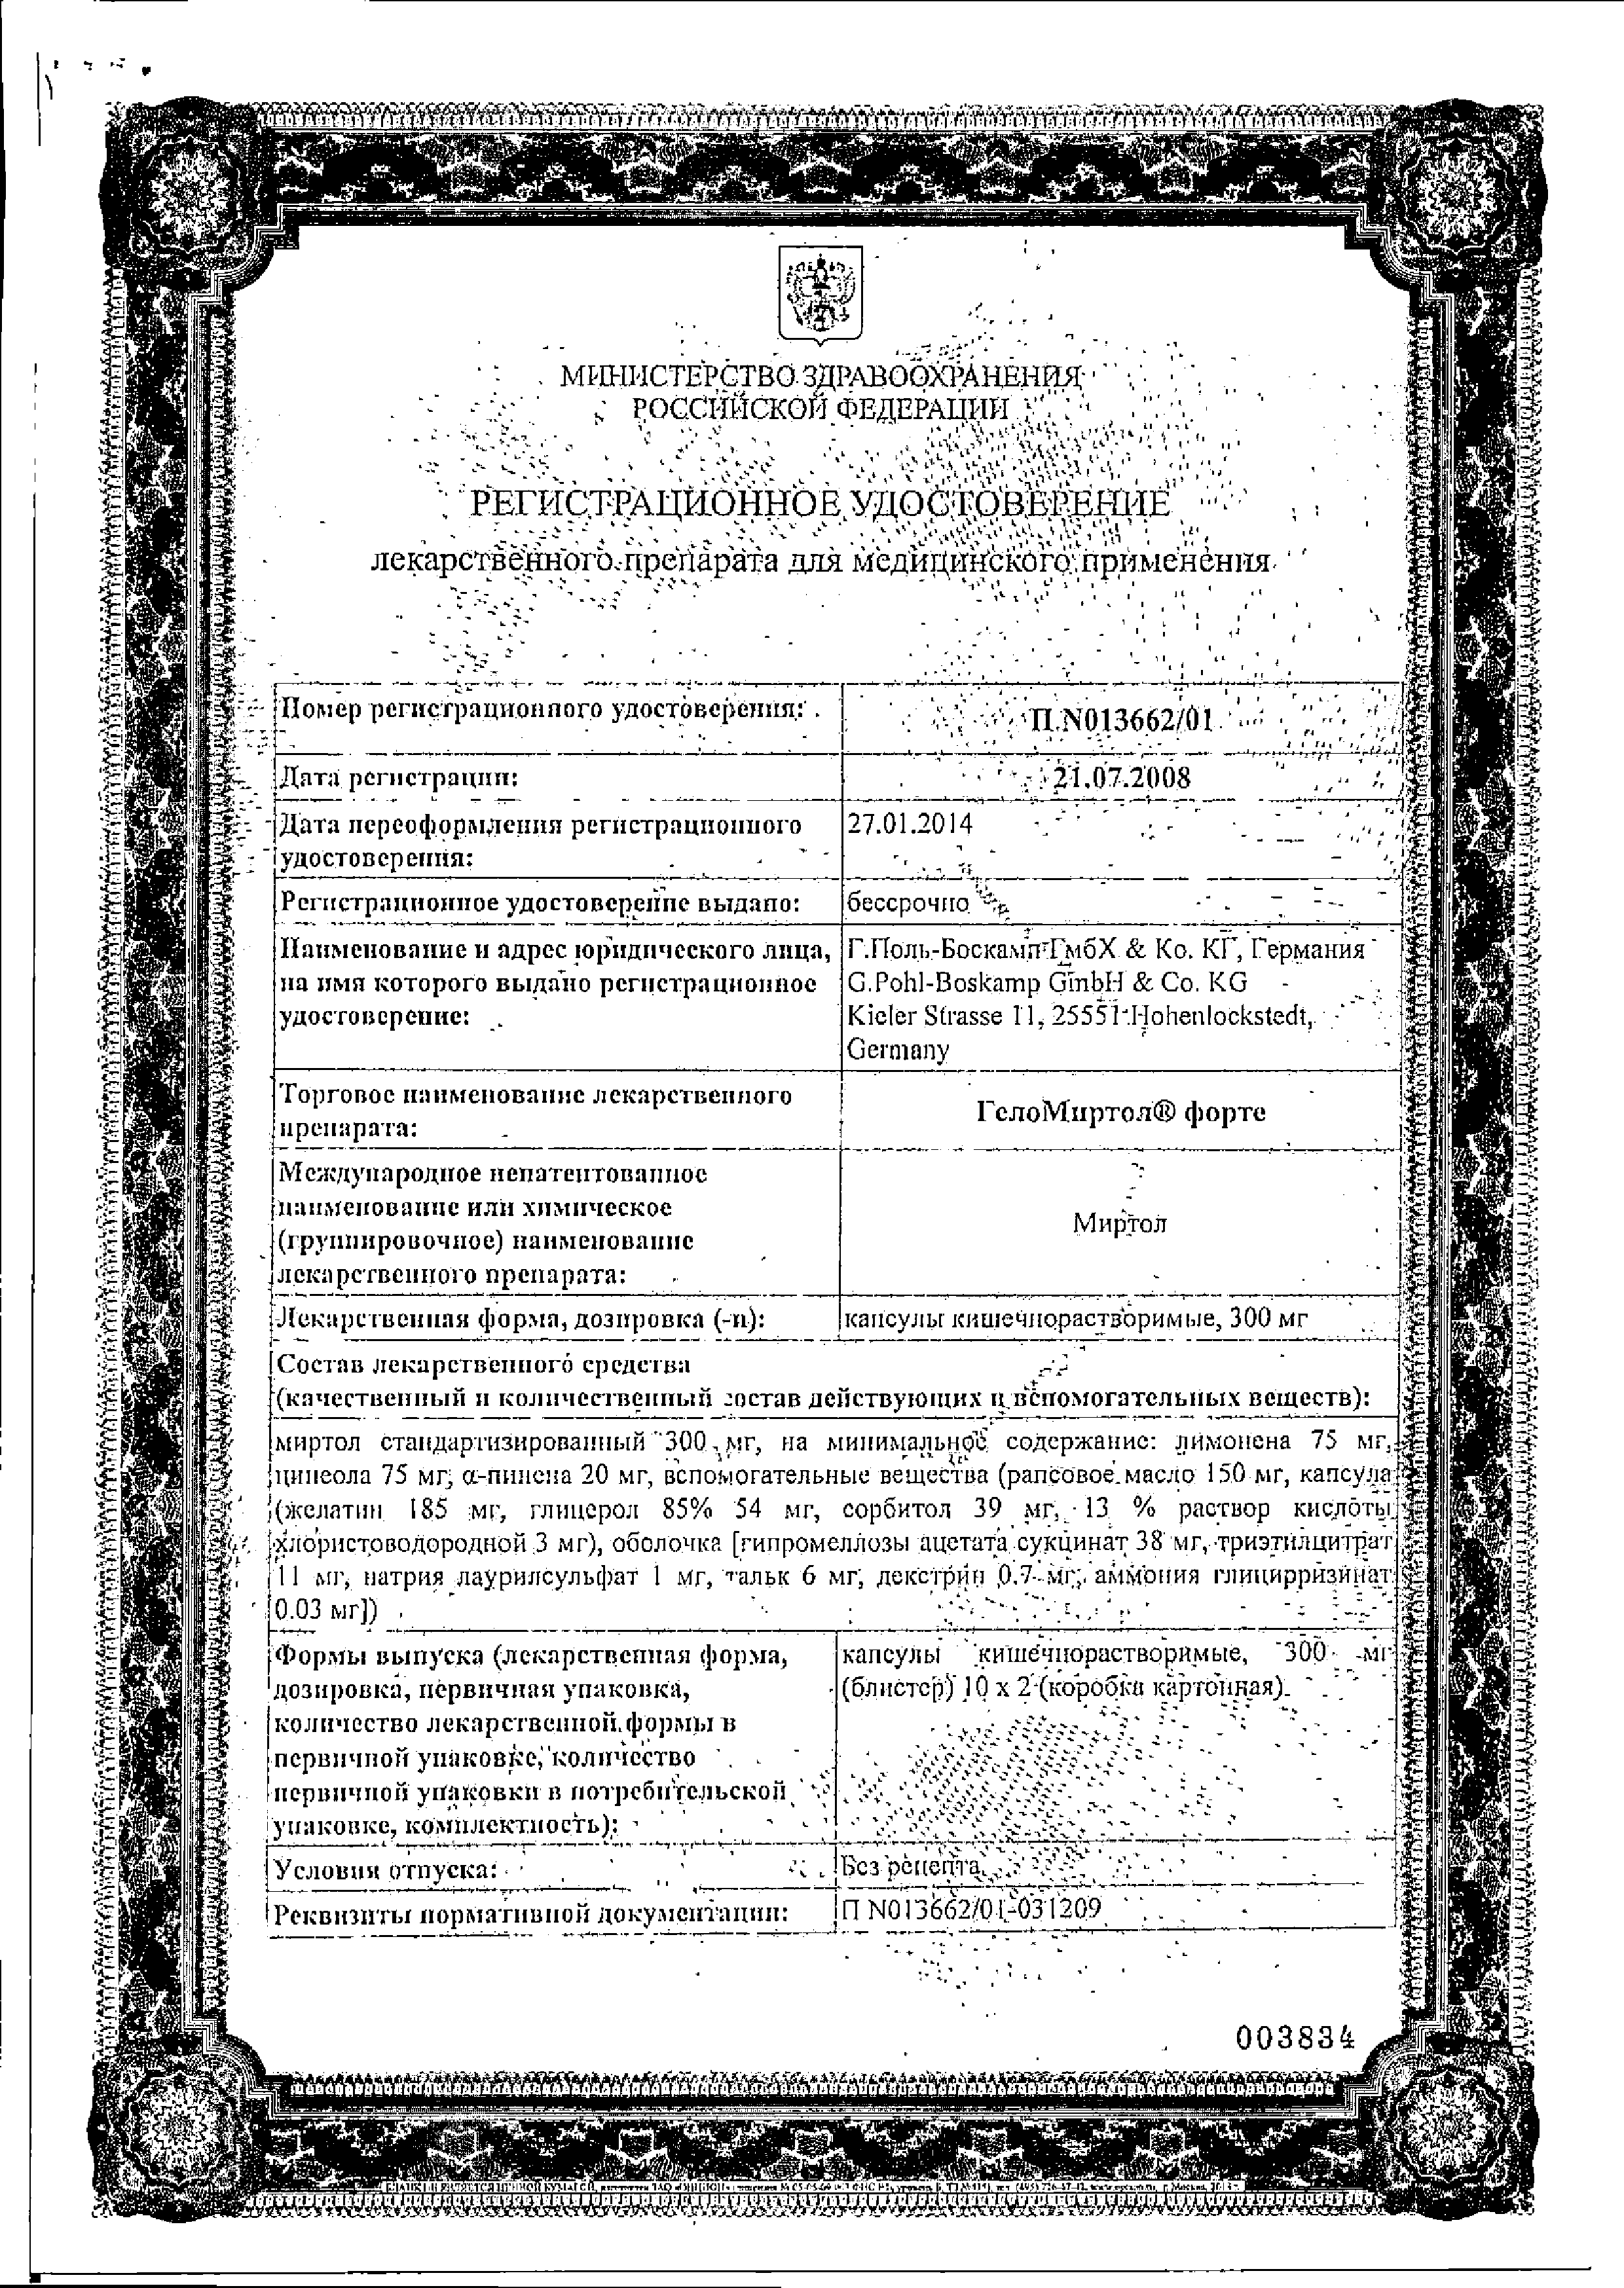 ГелоМиртол форте сертификат